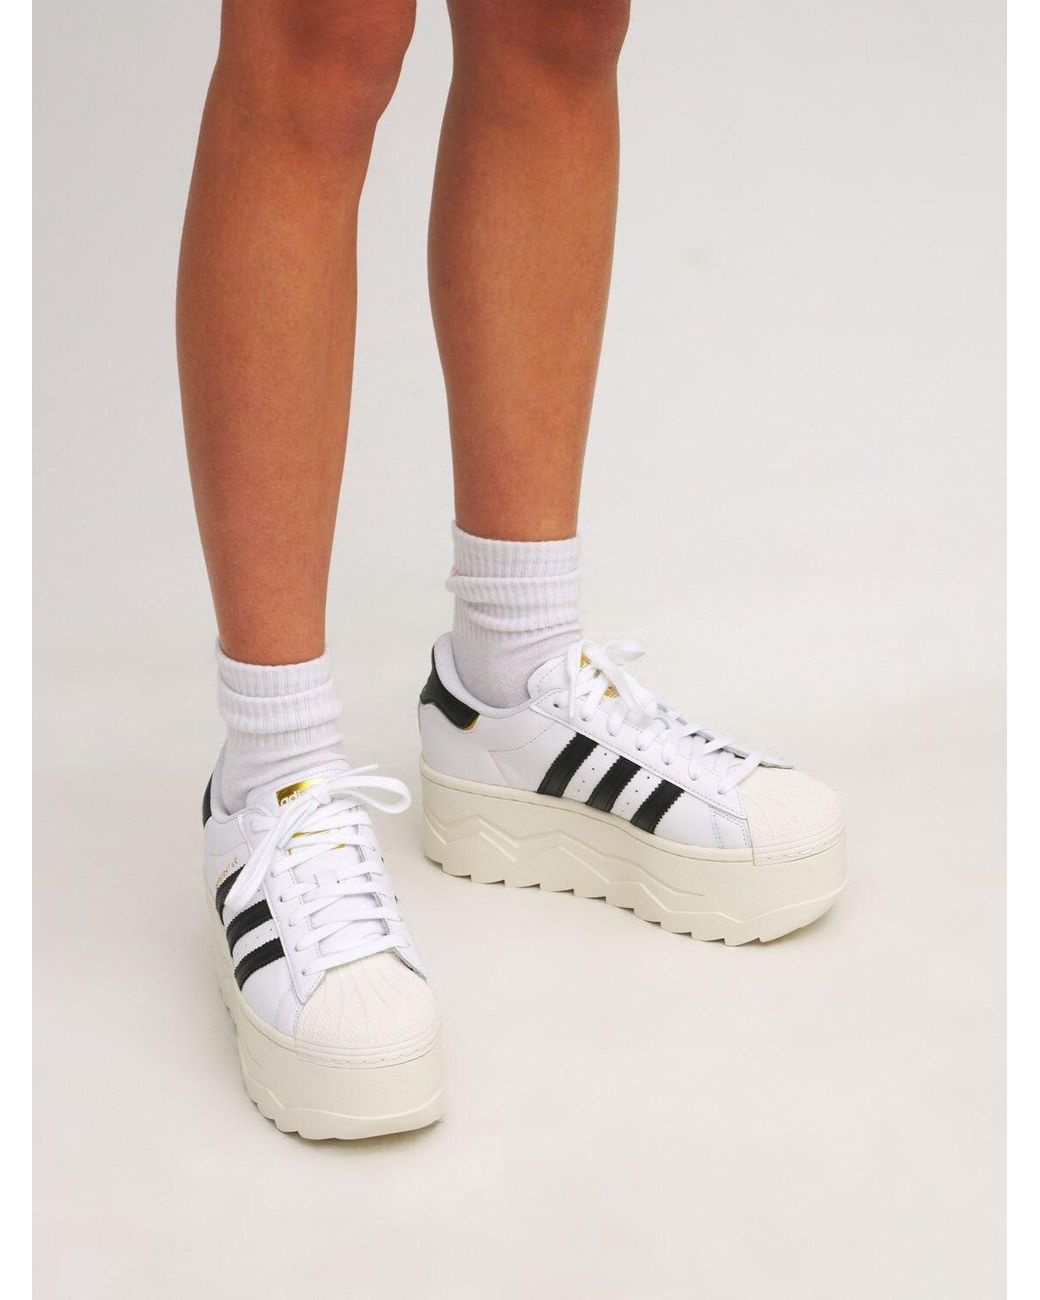 adidas Originals Leather Superstar Platform Sneakers in White | Lyst